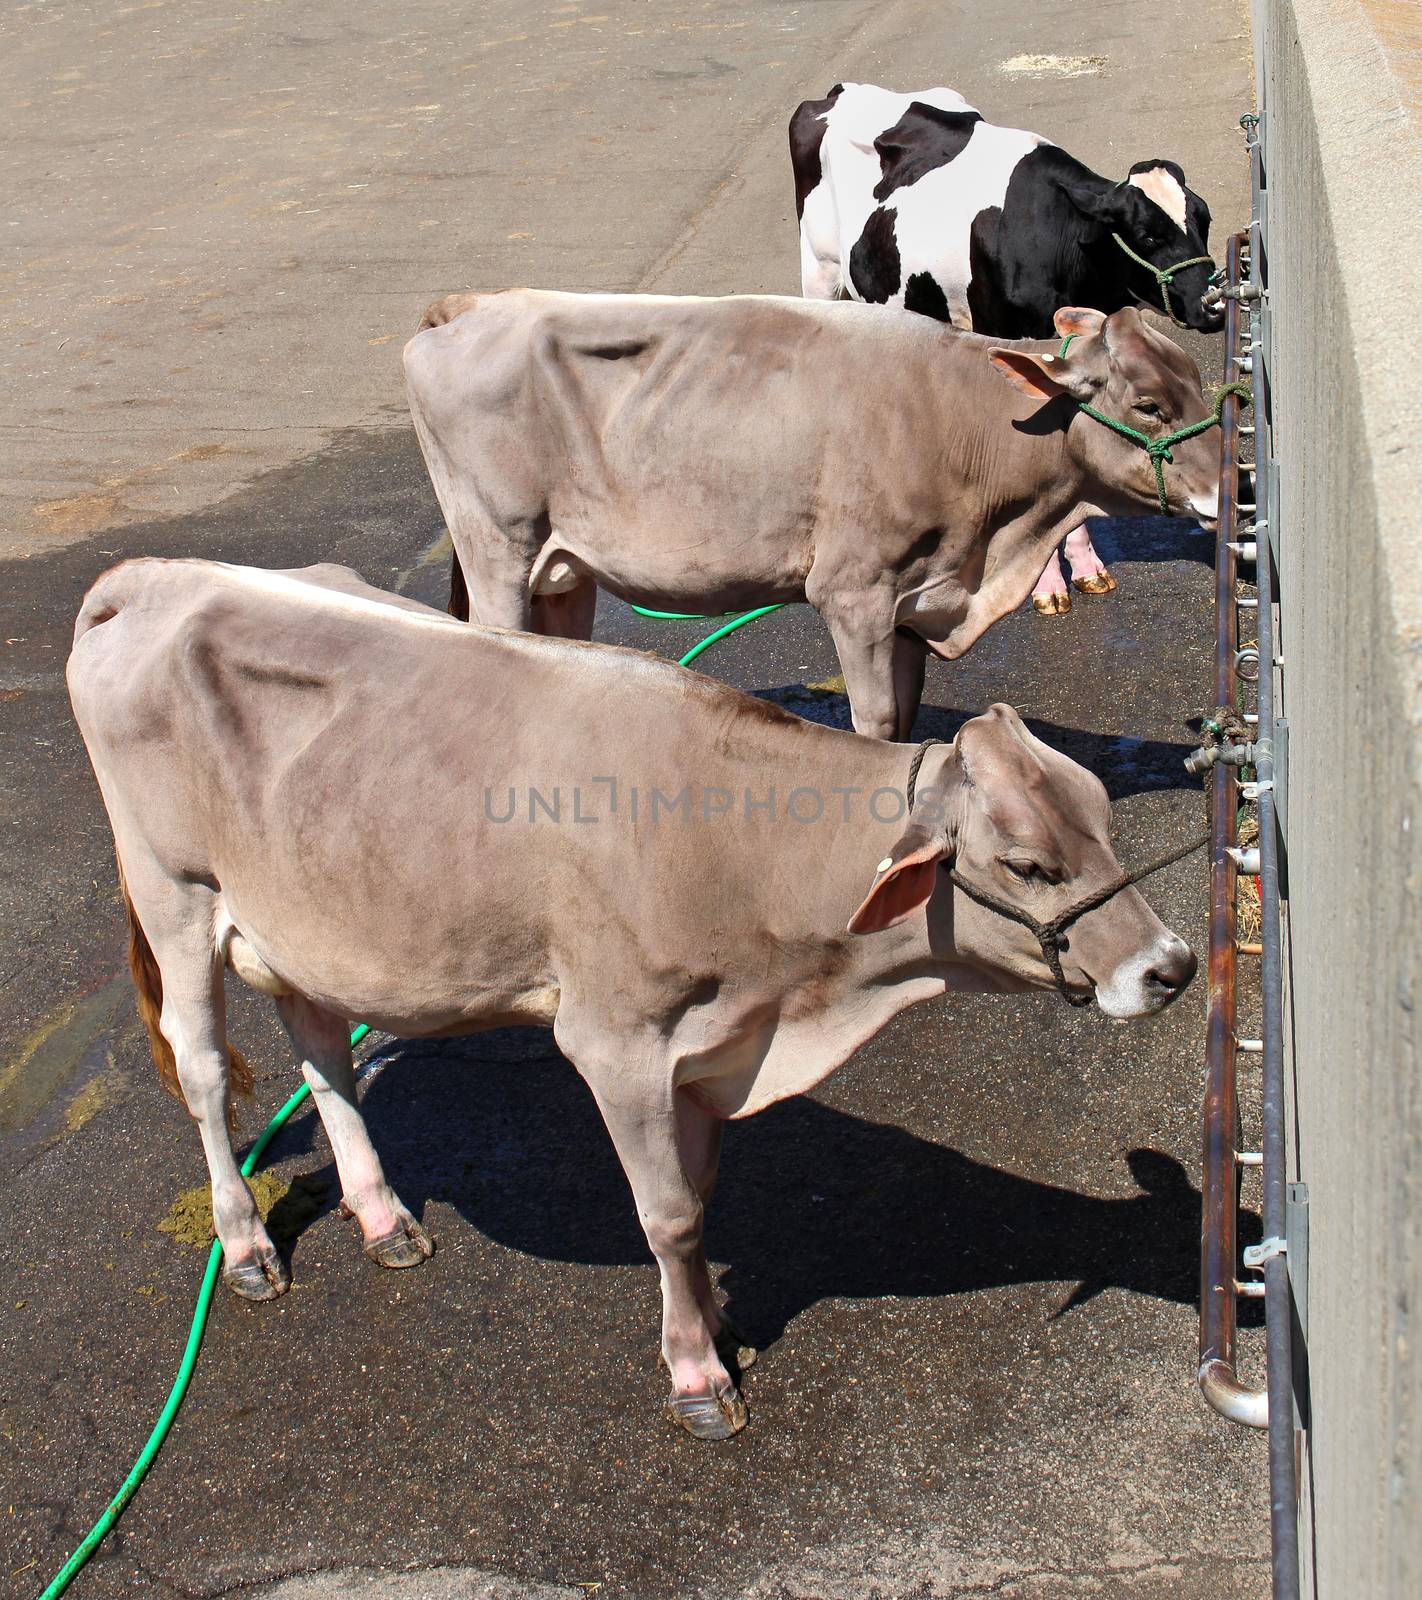 Three confined cows